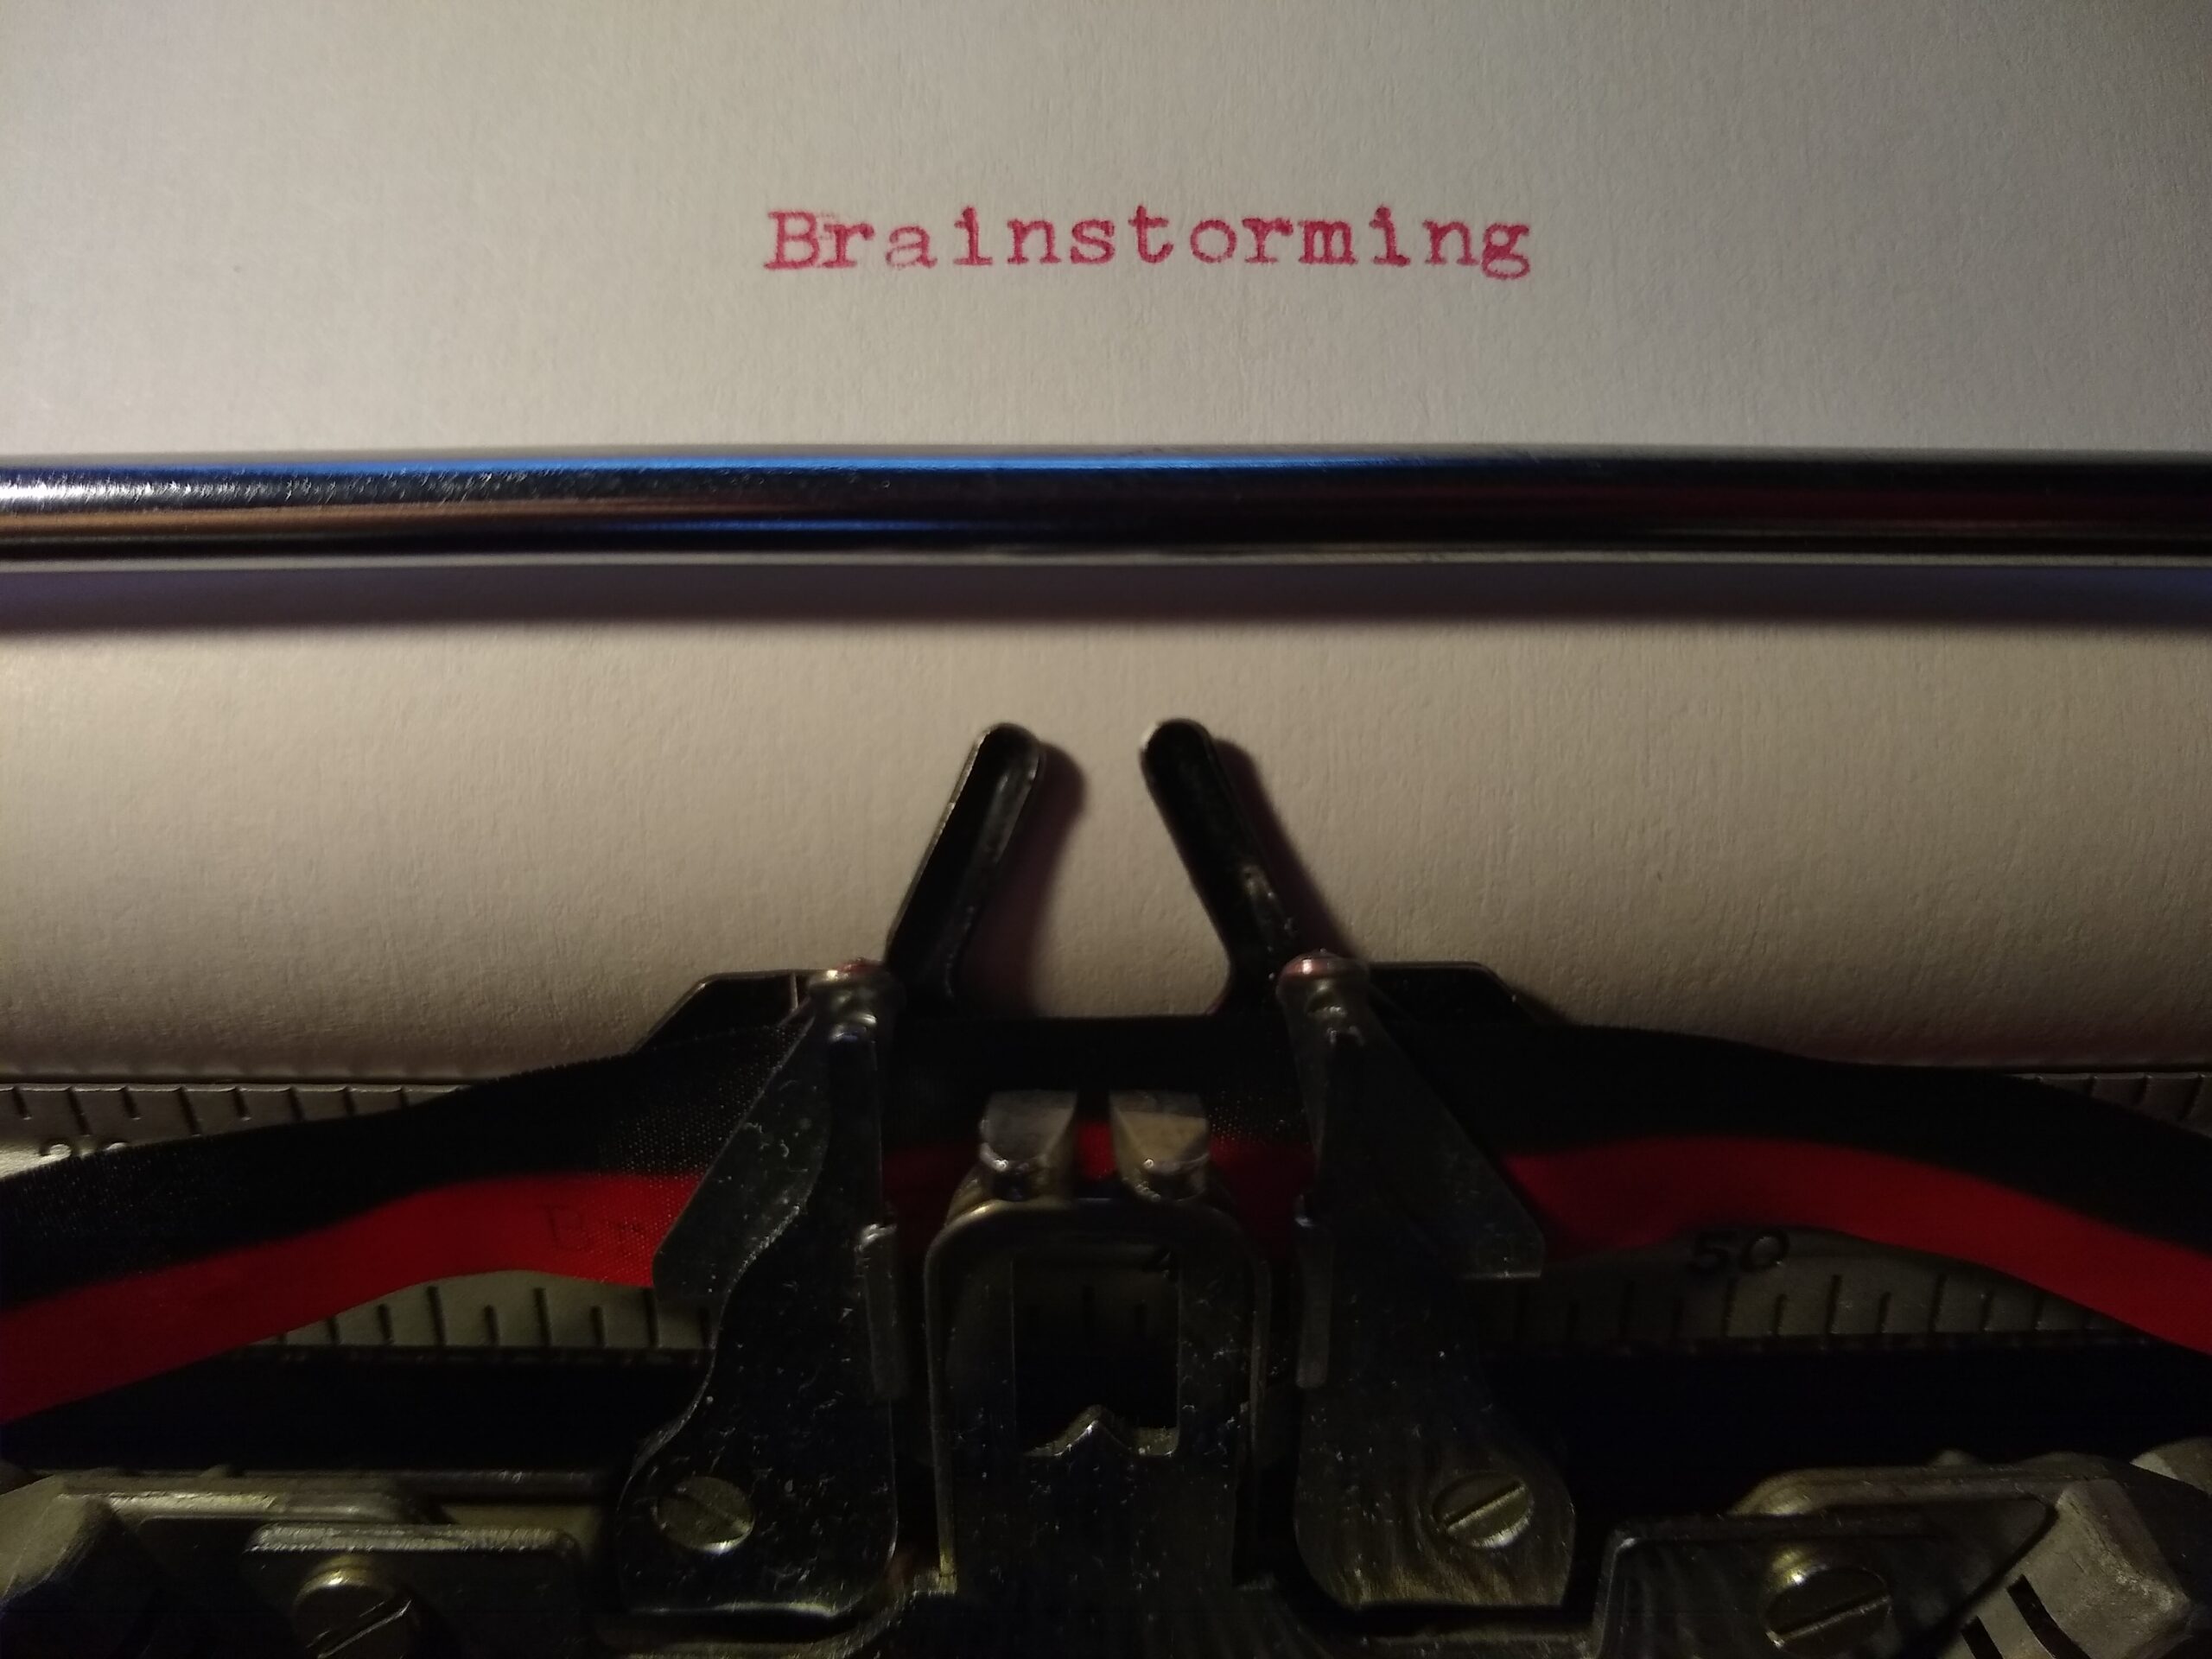 typewritten word "Brainstorming" on white paper in red ink